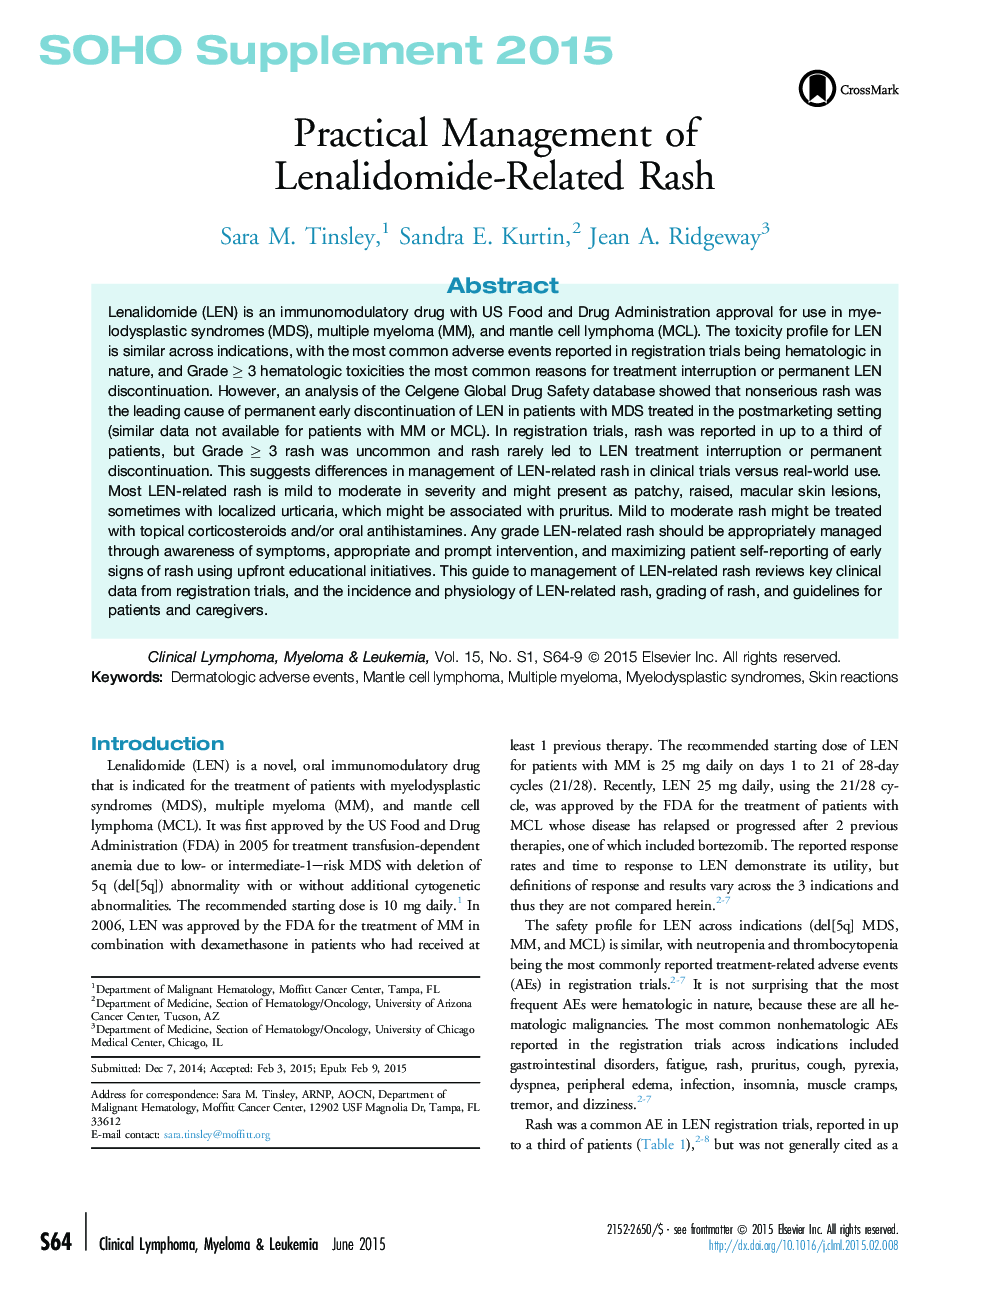 SOHO Supplement 2015Practical Management of Lenalidomide-Related Rash